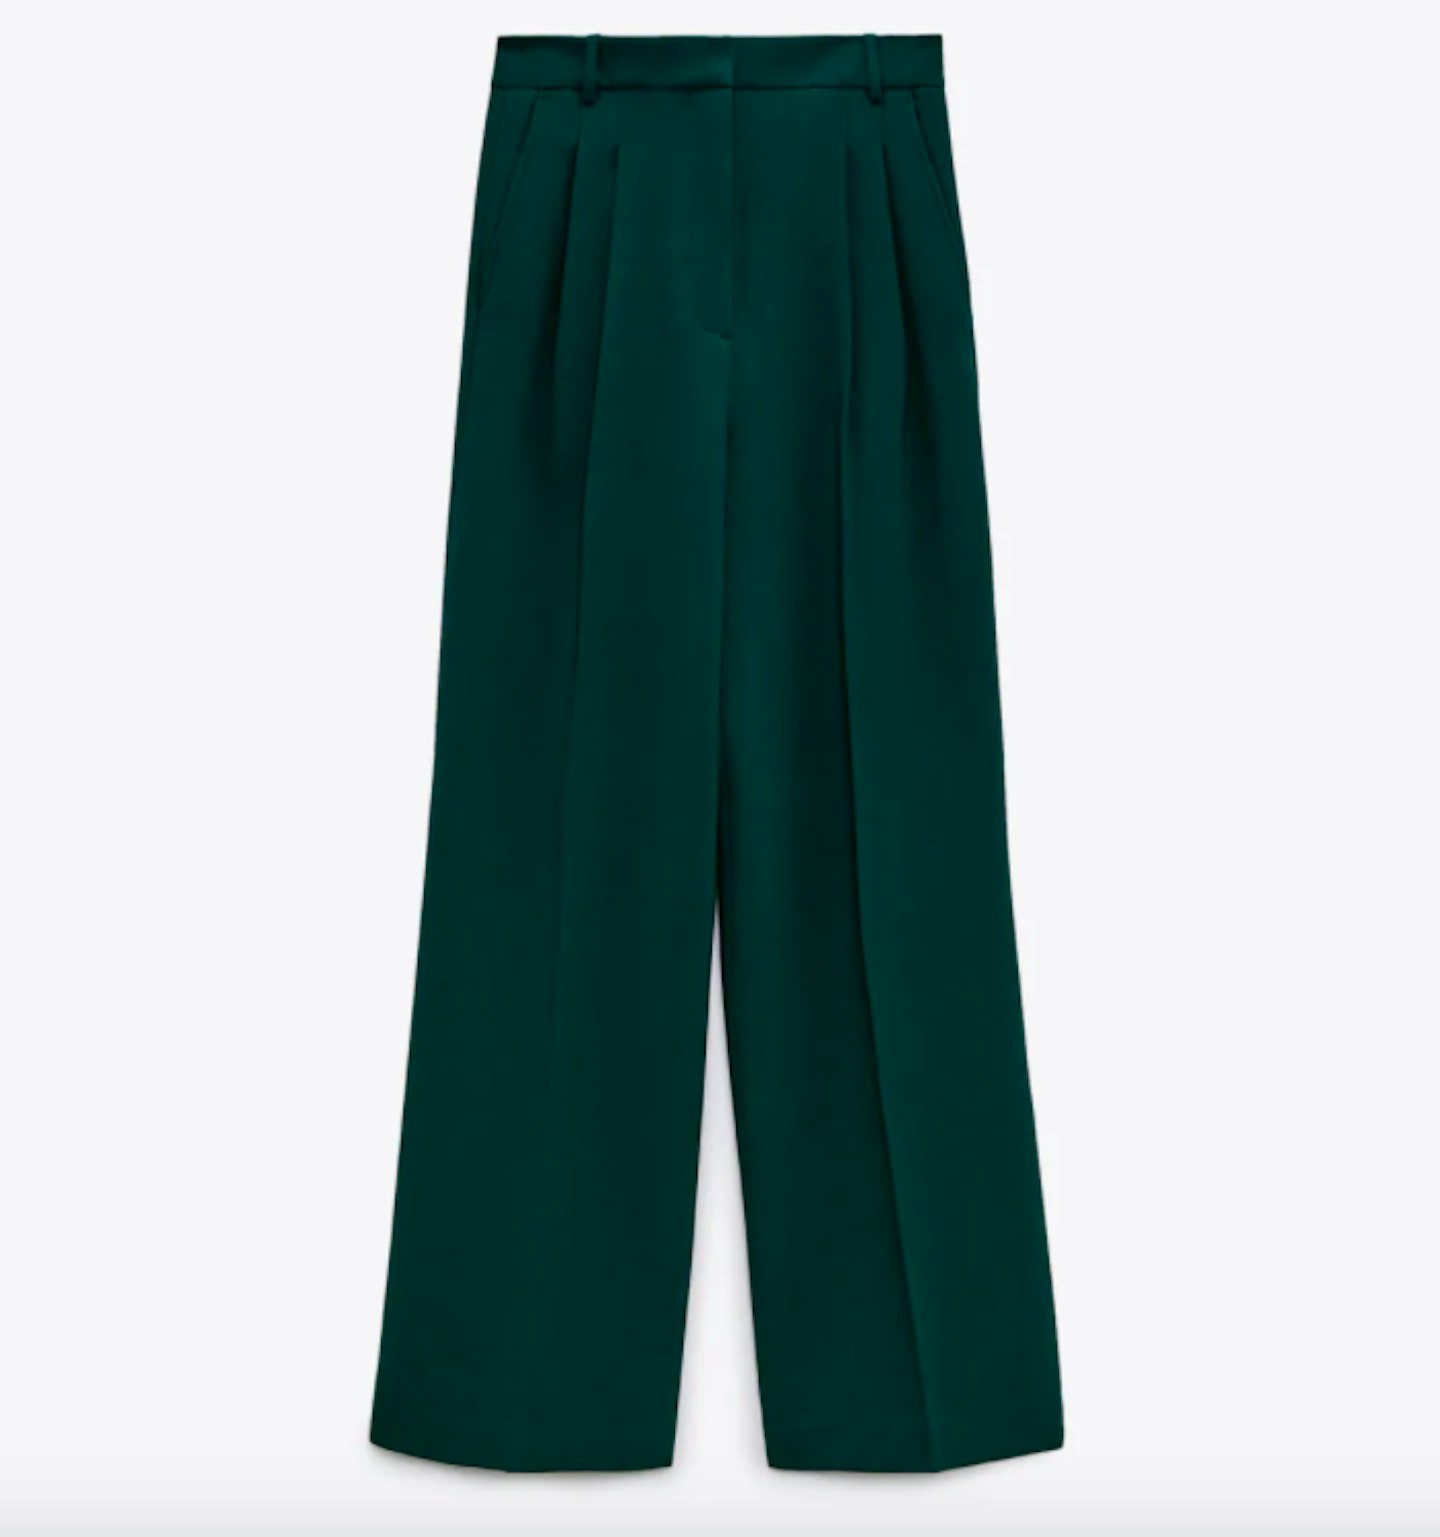 Zara, Mid-Rise Trousers, £29.99